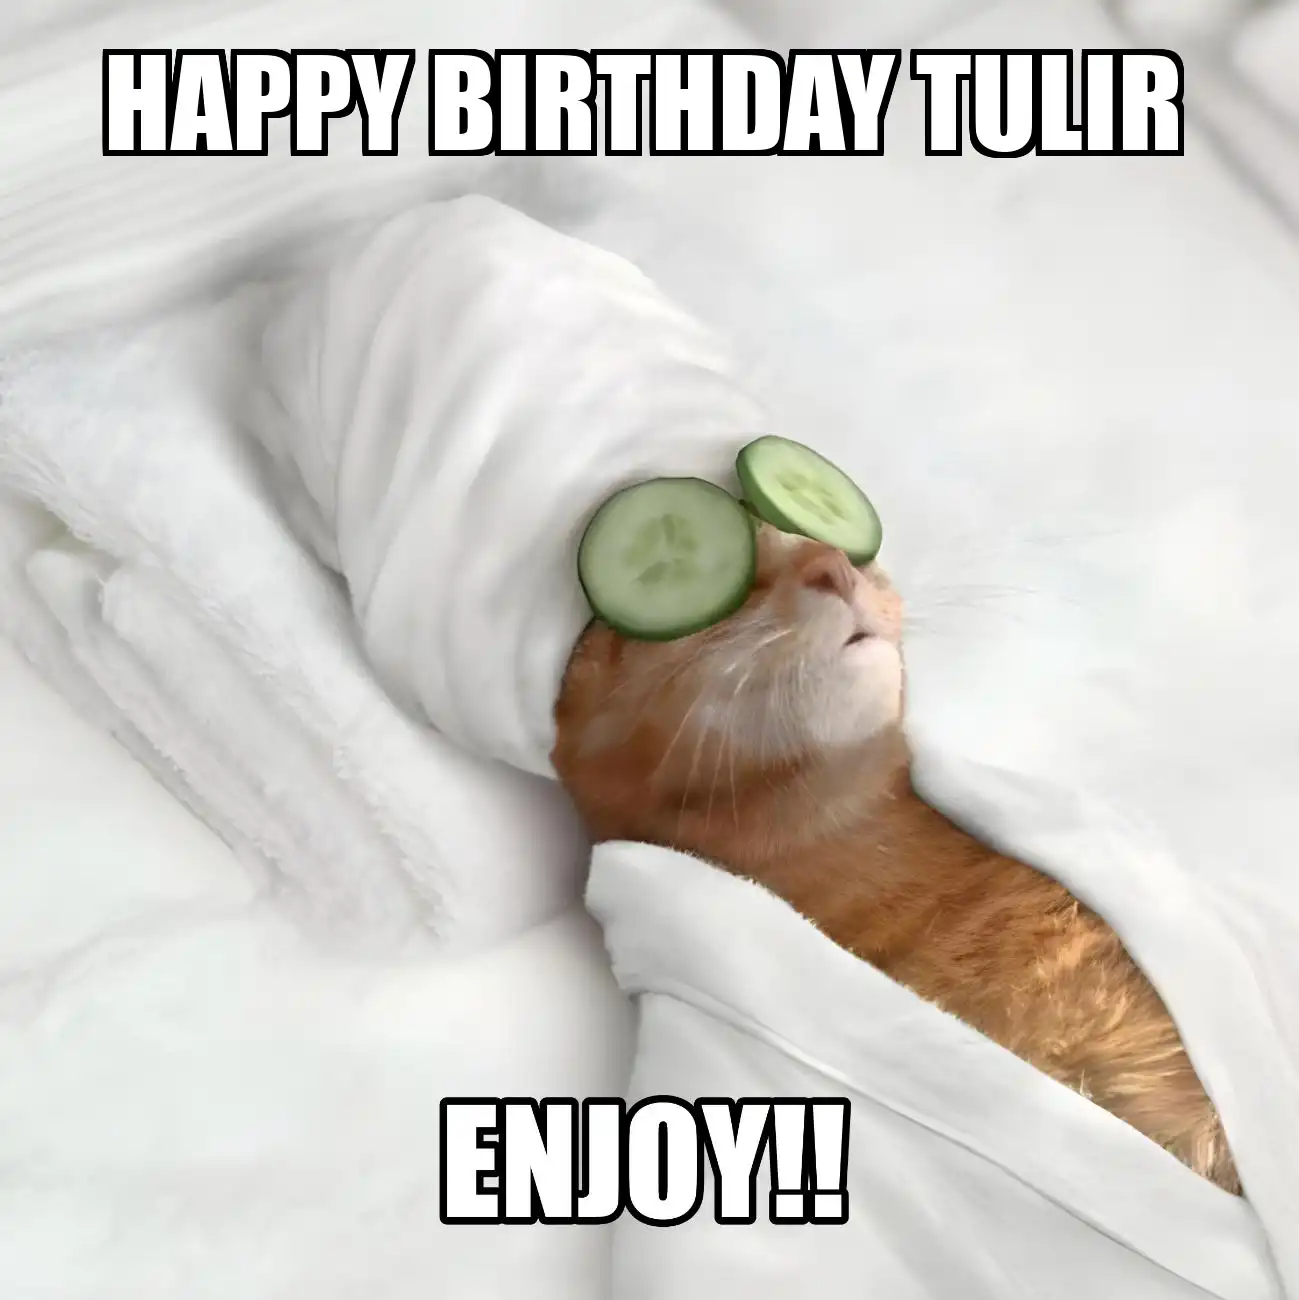 Happy Birthday Tulir Enjoy Cat Meme